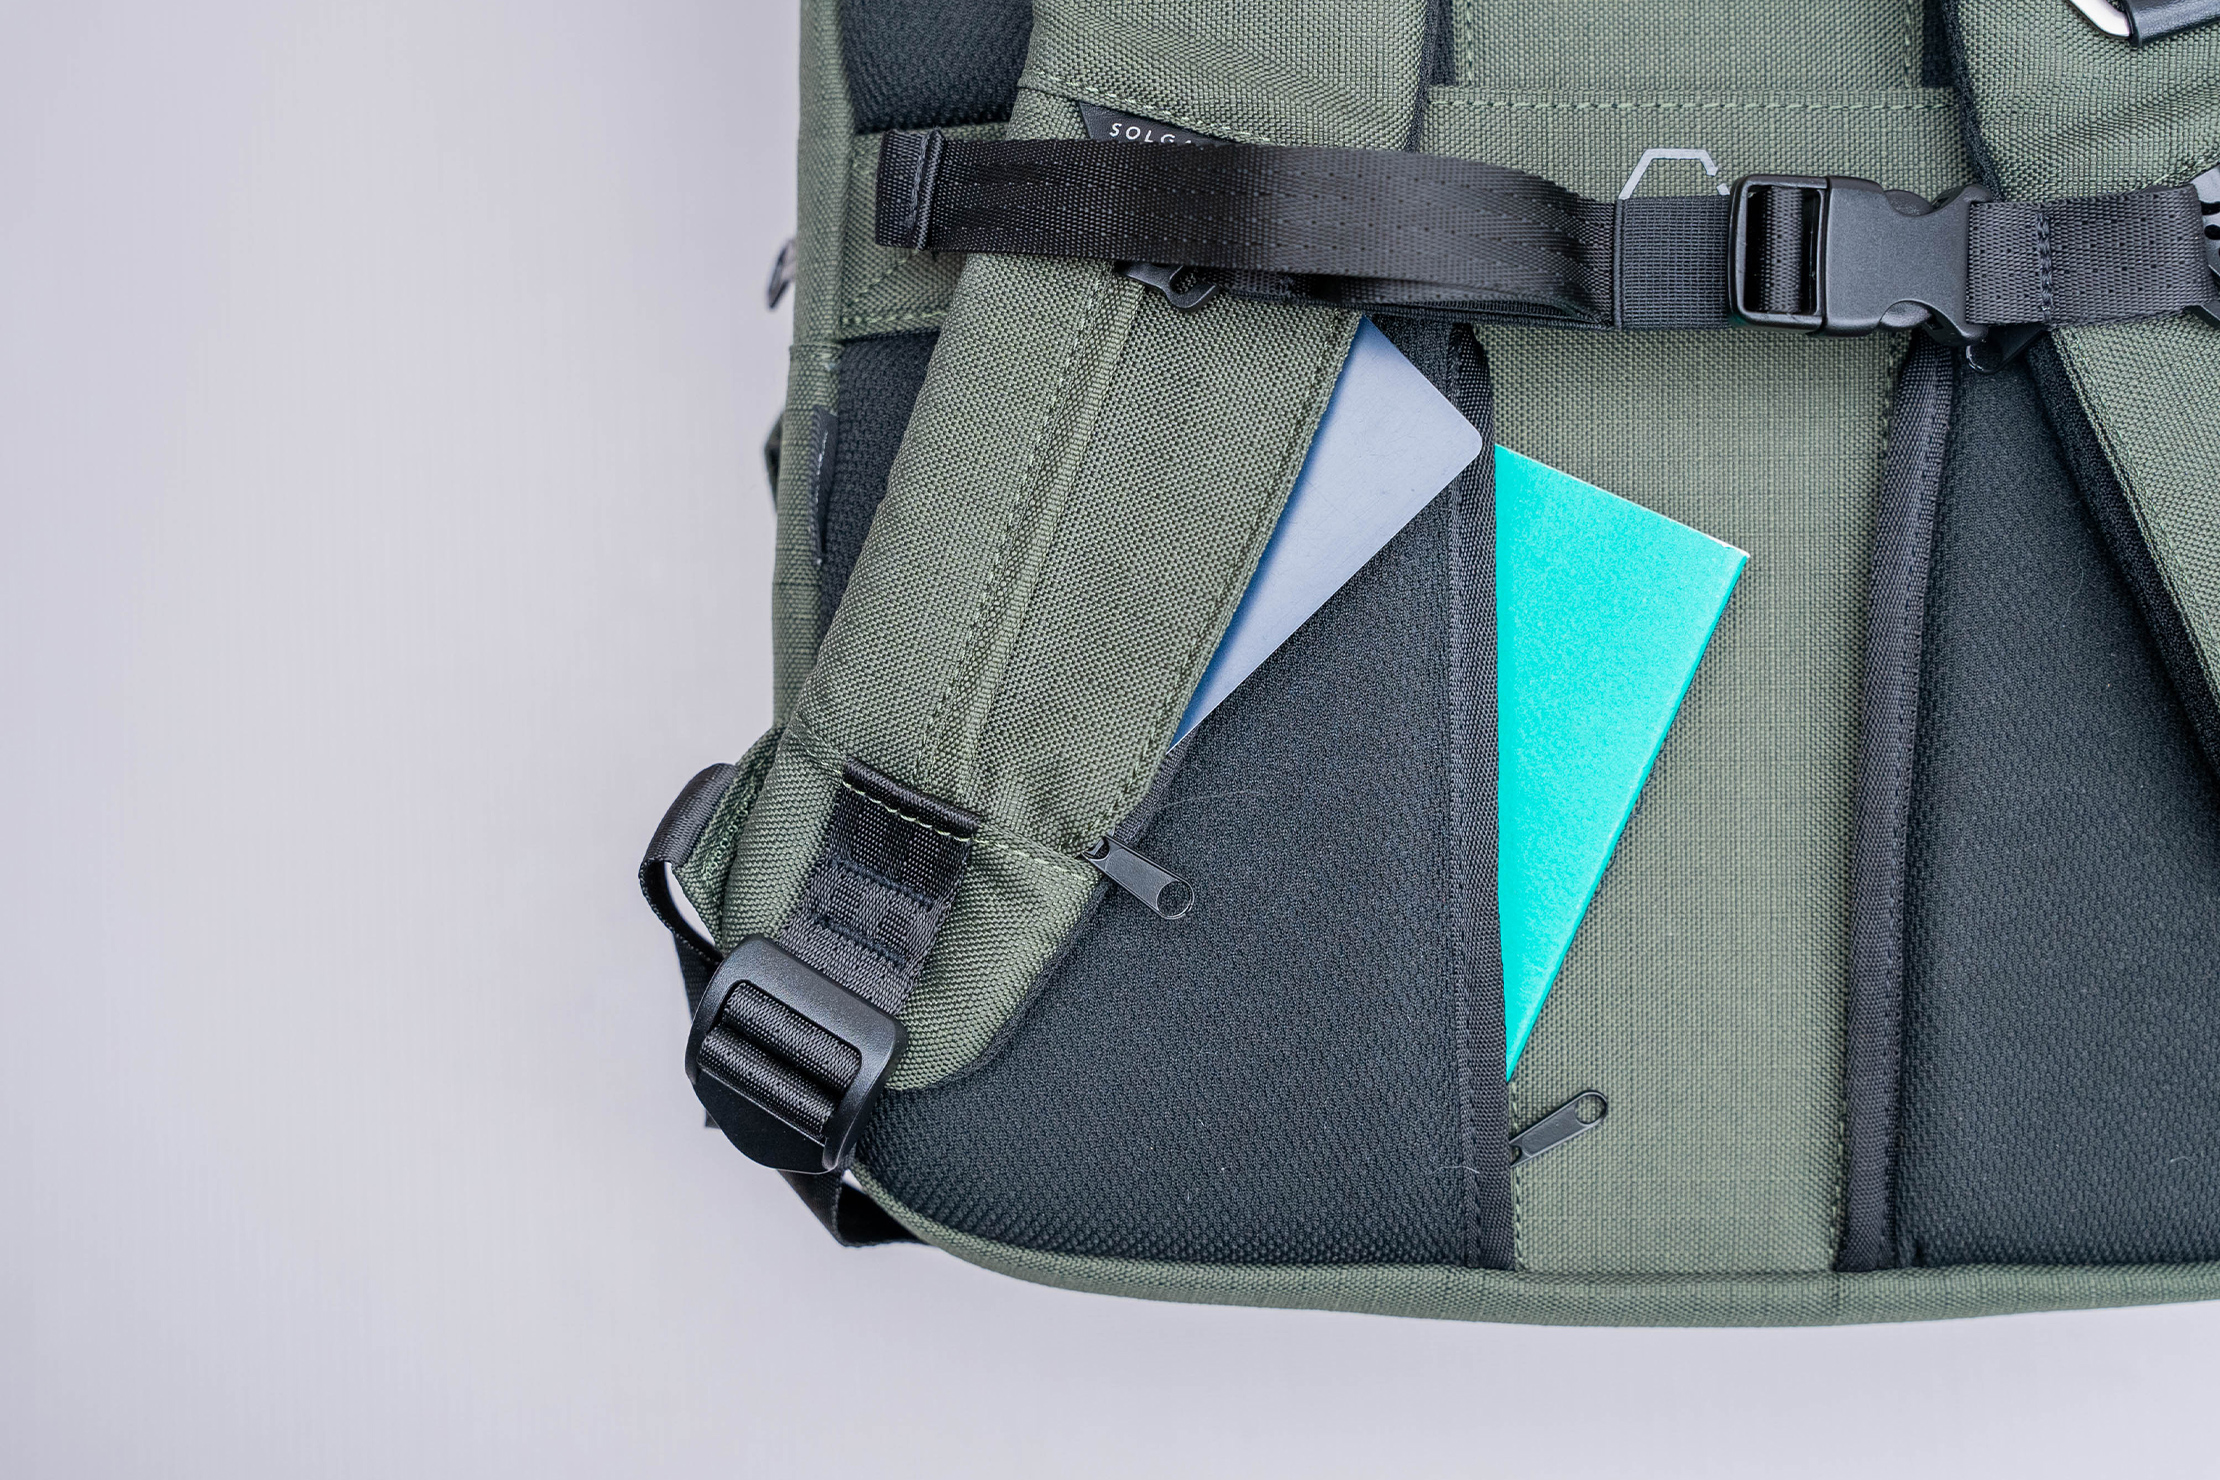 Solgaard Lifepack Endeavor (with closet) Secret Pocket